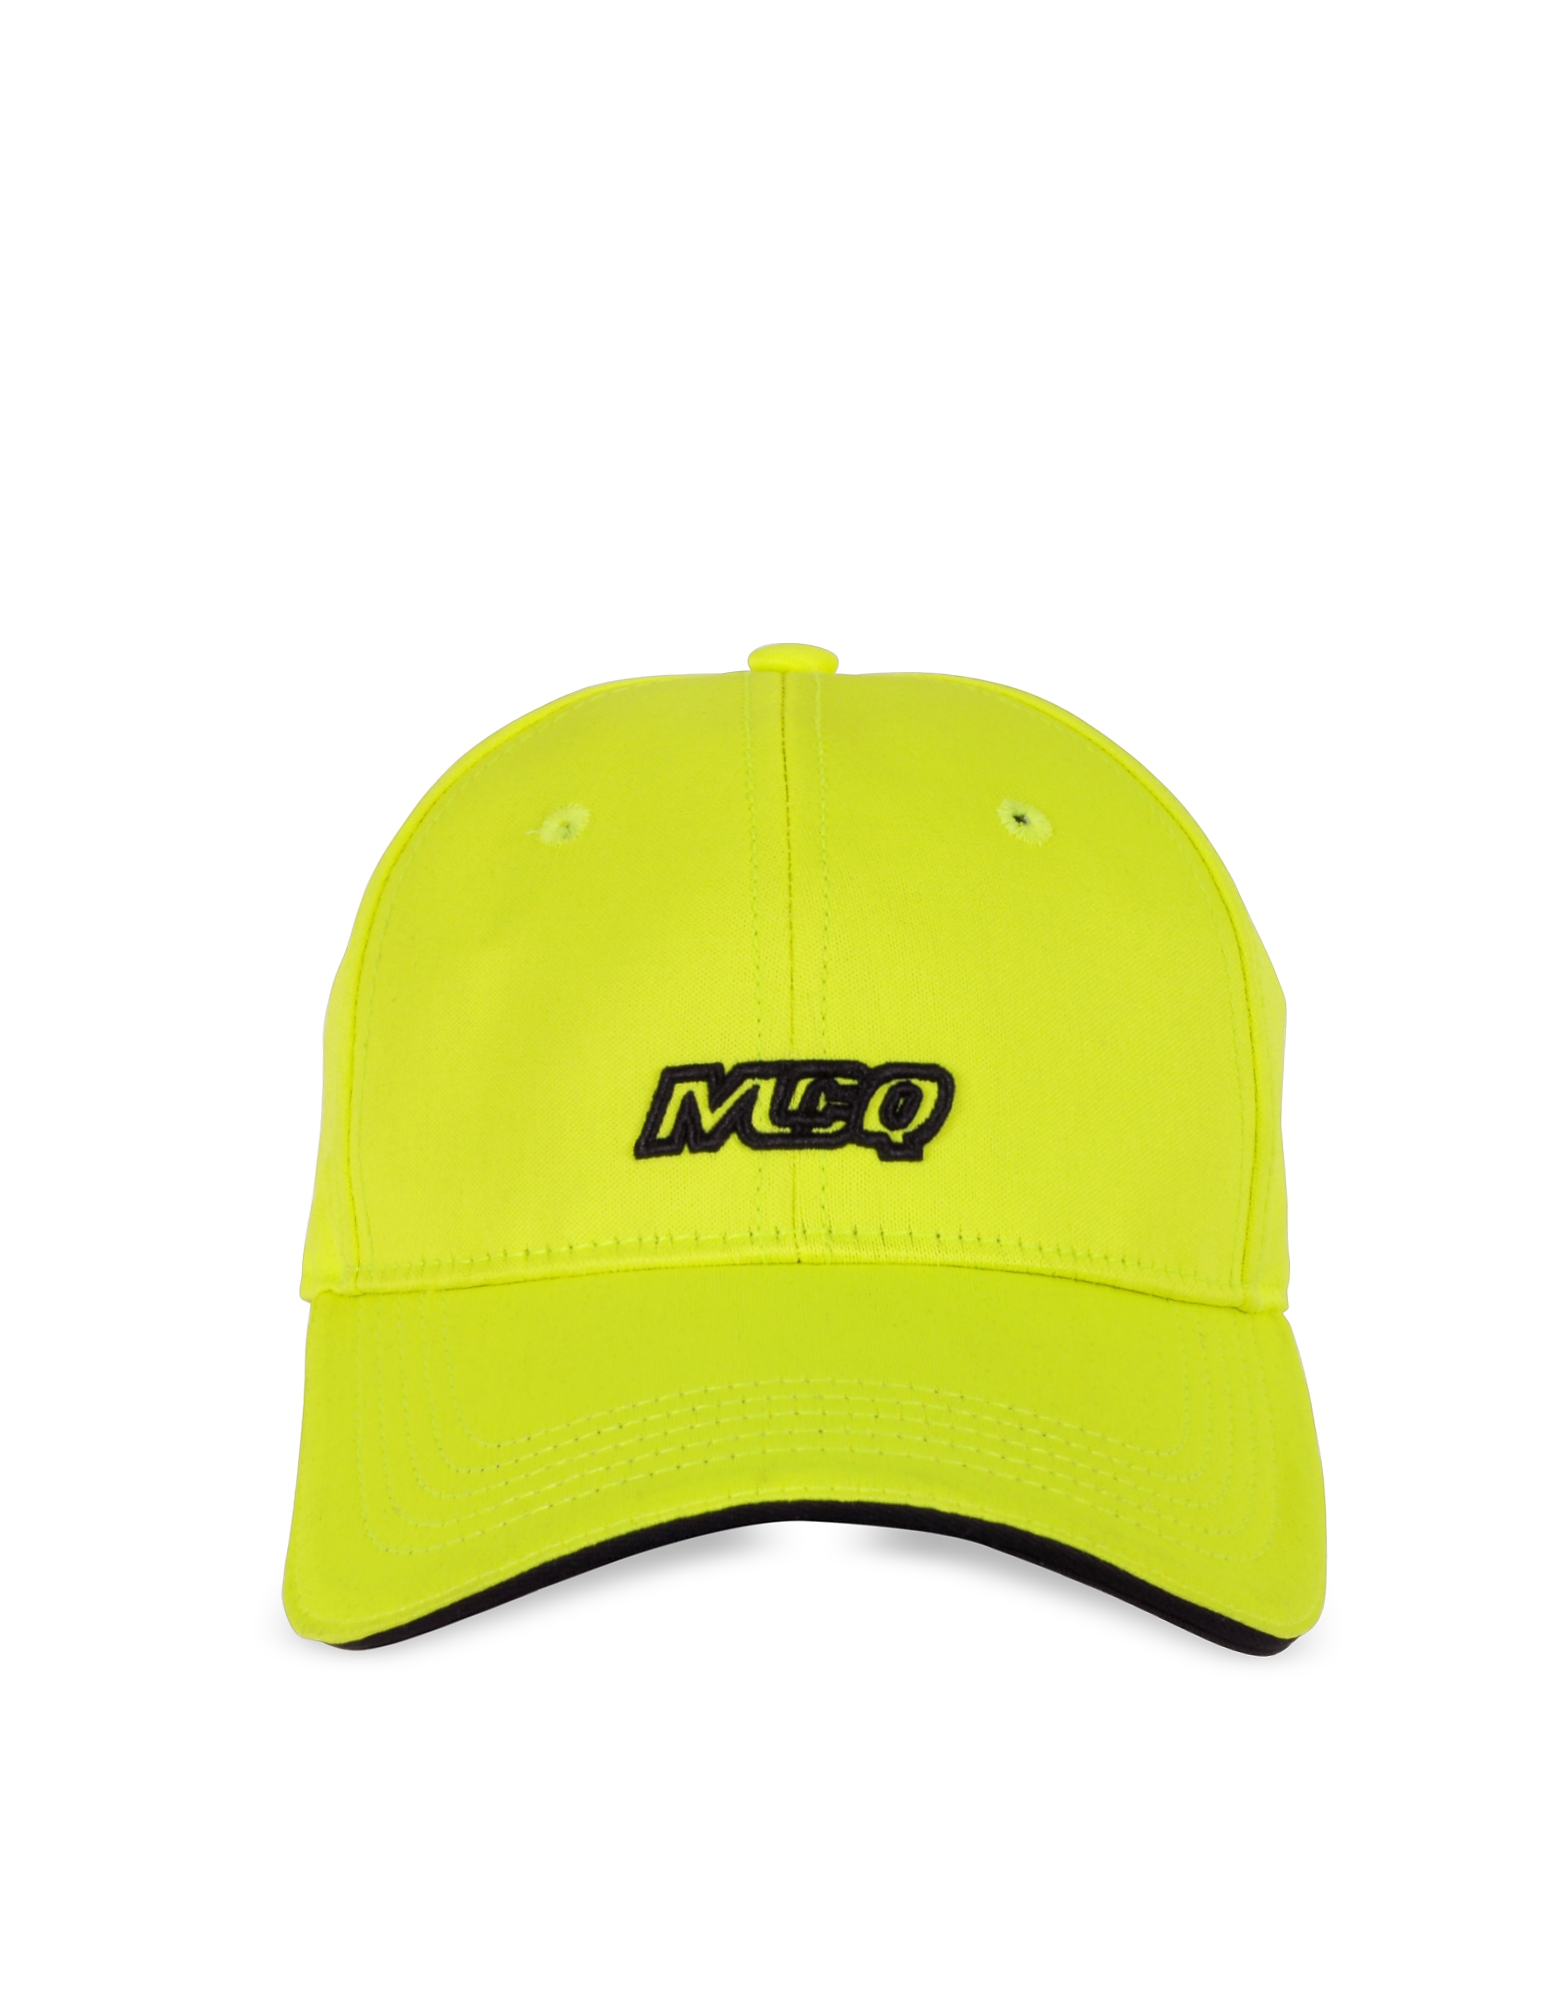 

Neon Yellow Jersey Men's Basaball Cap